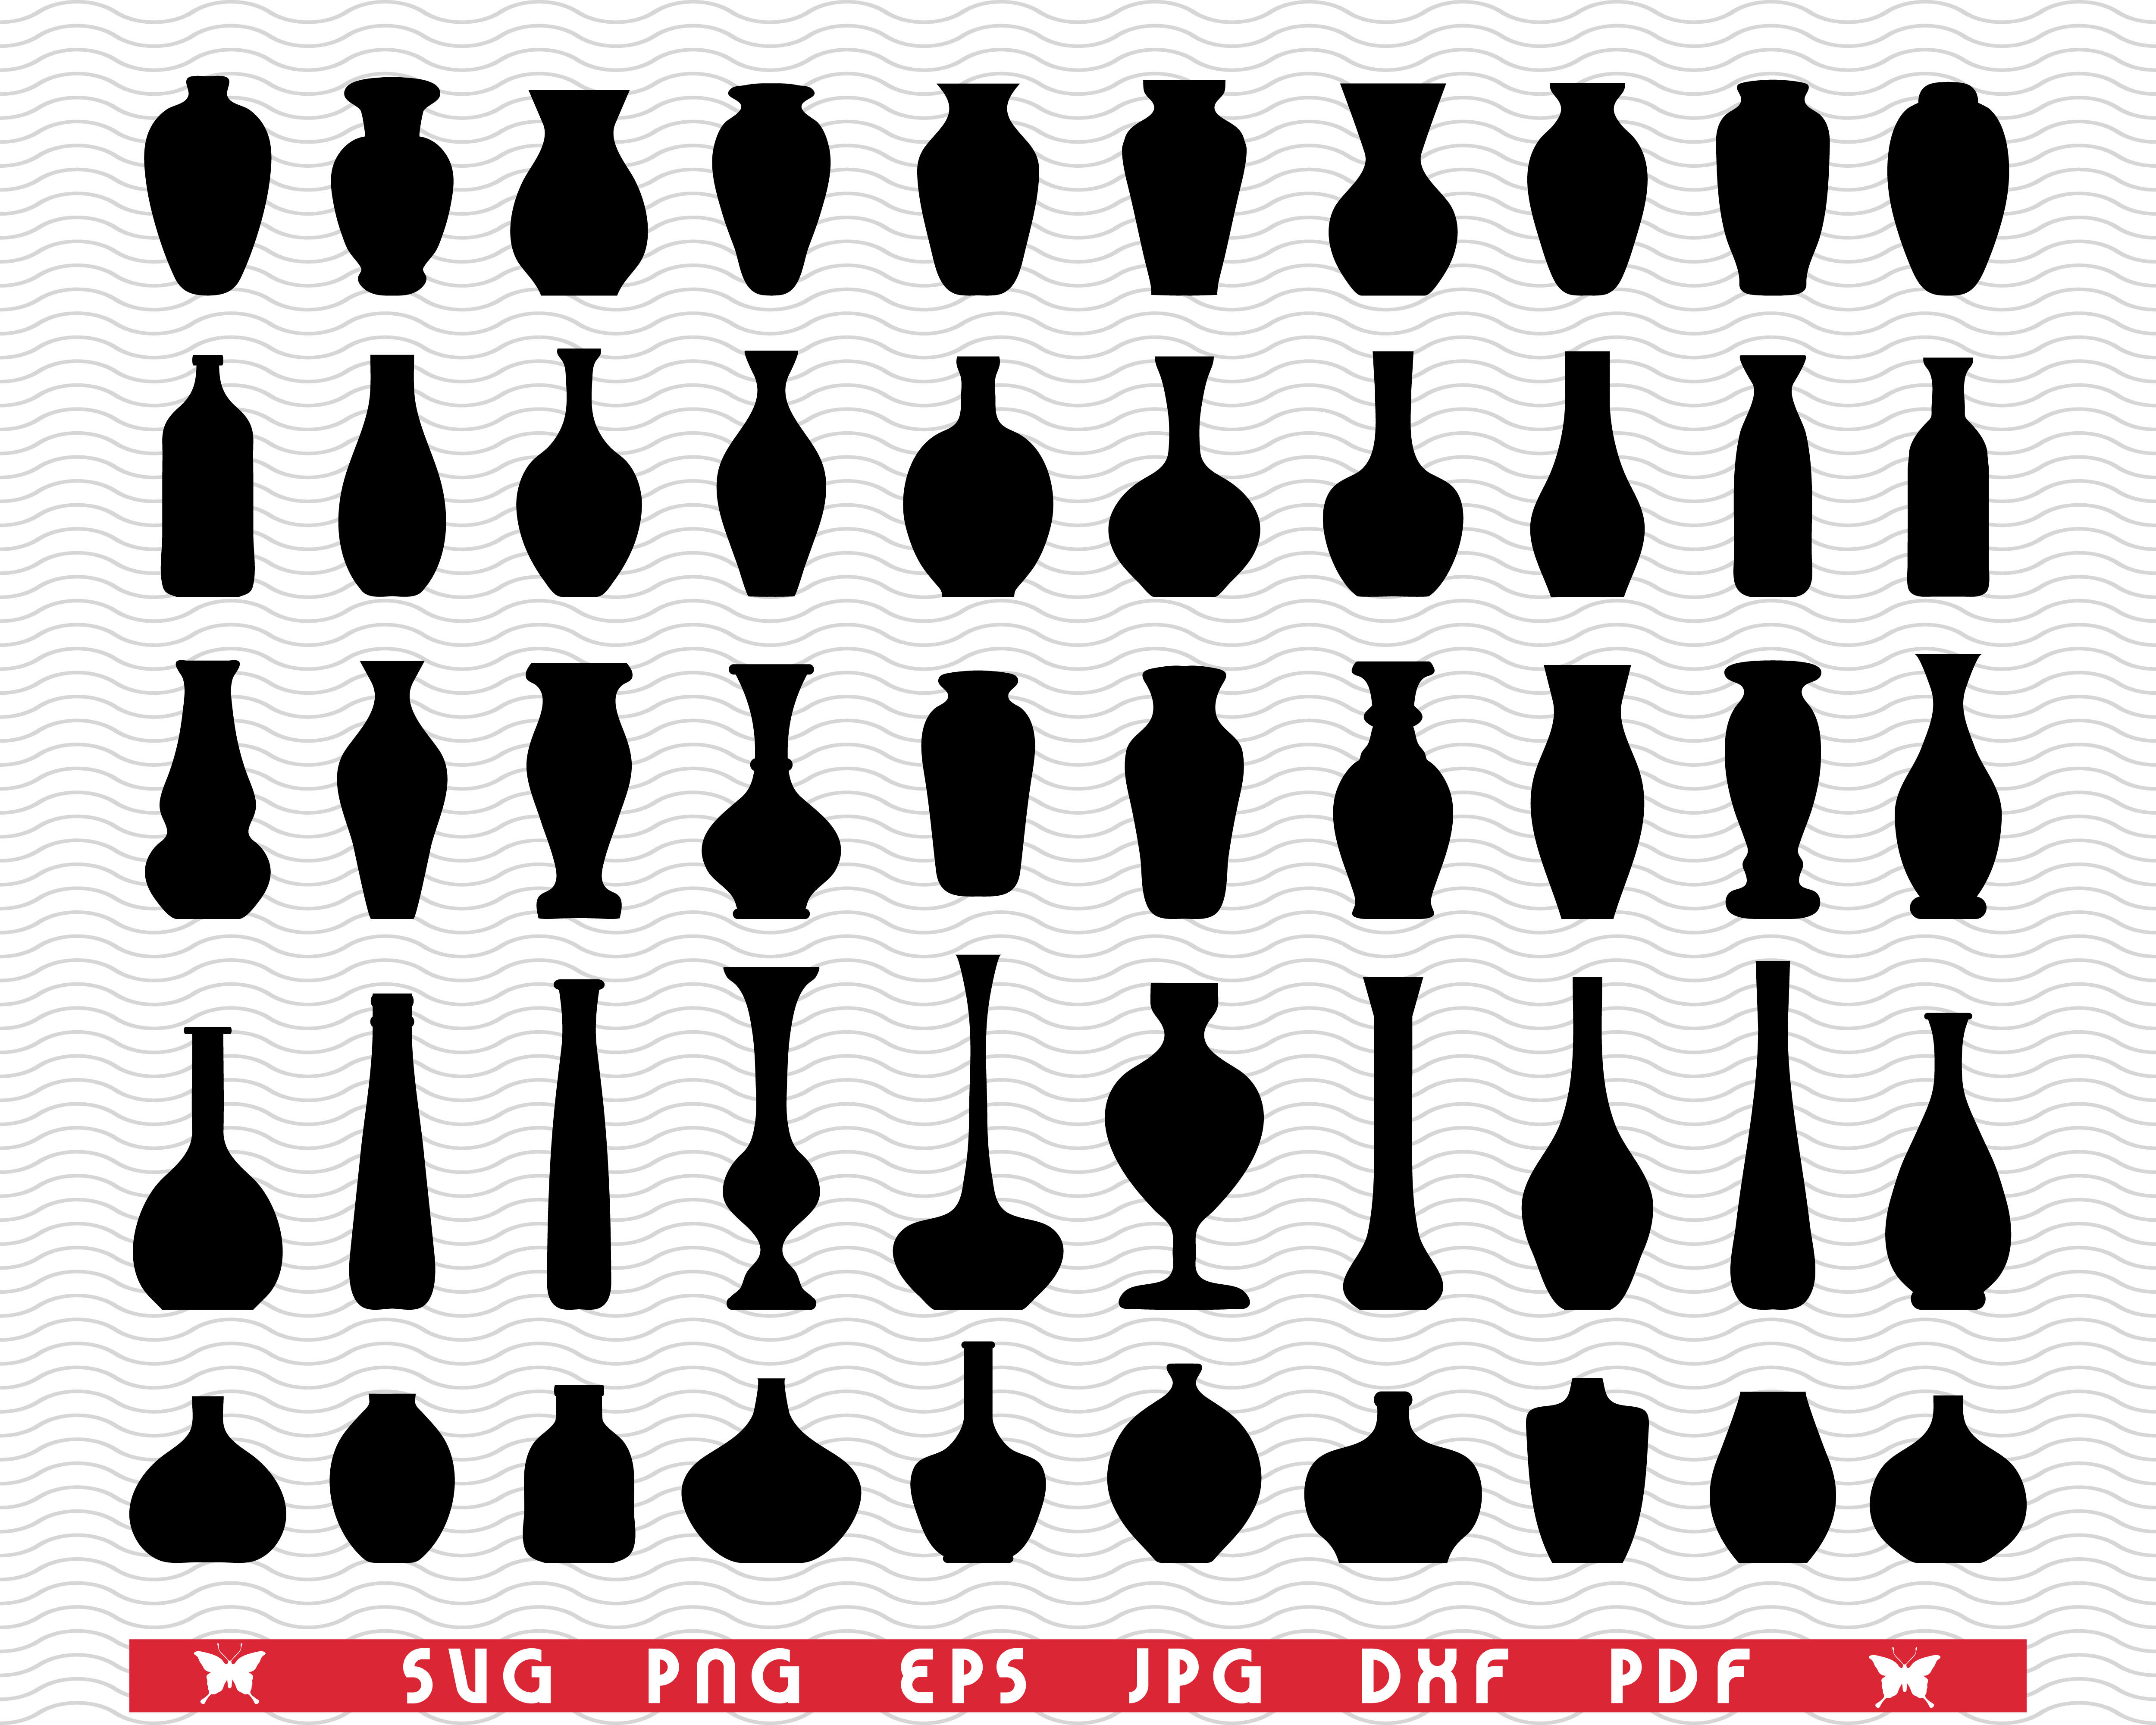 Download Svg Flower Vases Black Silhouettes Digital Clipart By Designstudiorm Thehungryjpeg Com